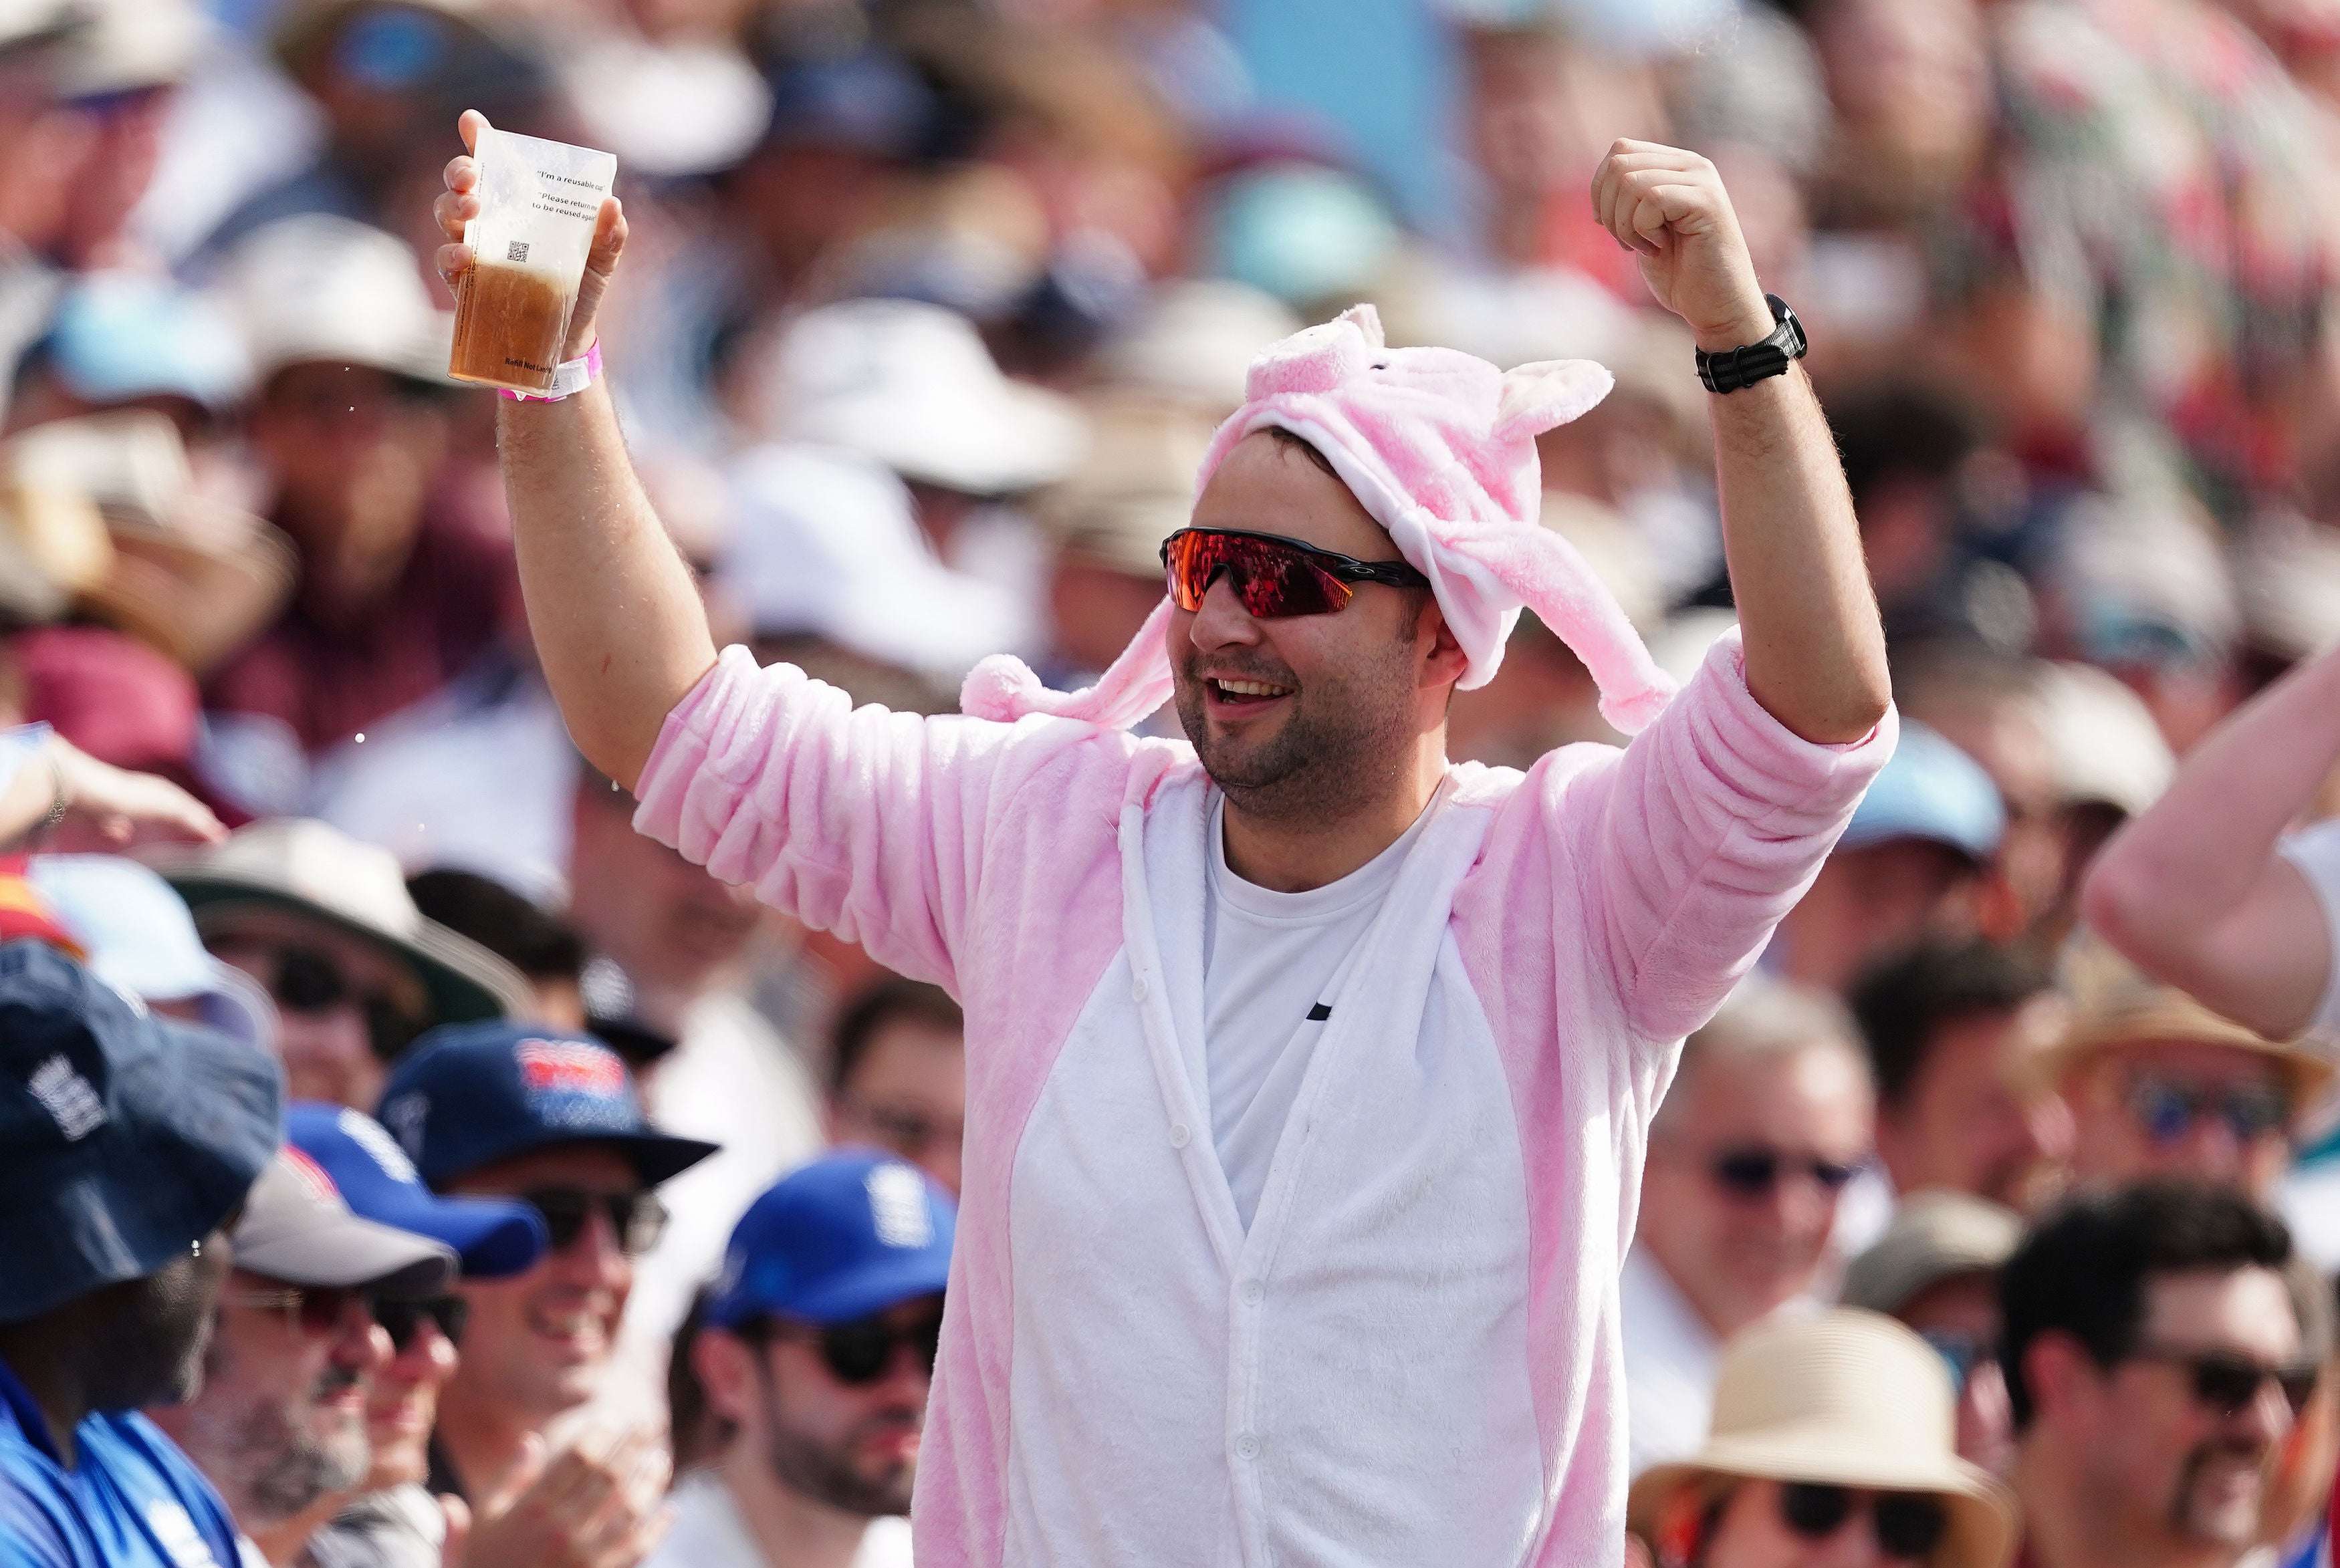 An England fan dressed as a pig enjoys the sunshine at Edgbaston